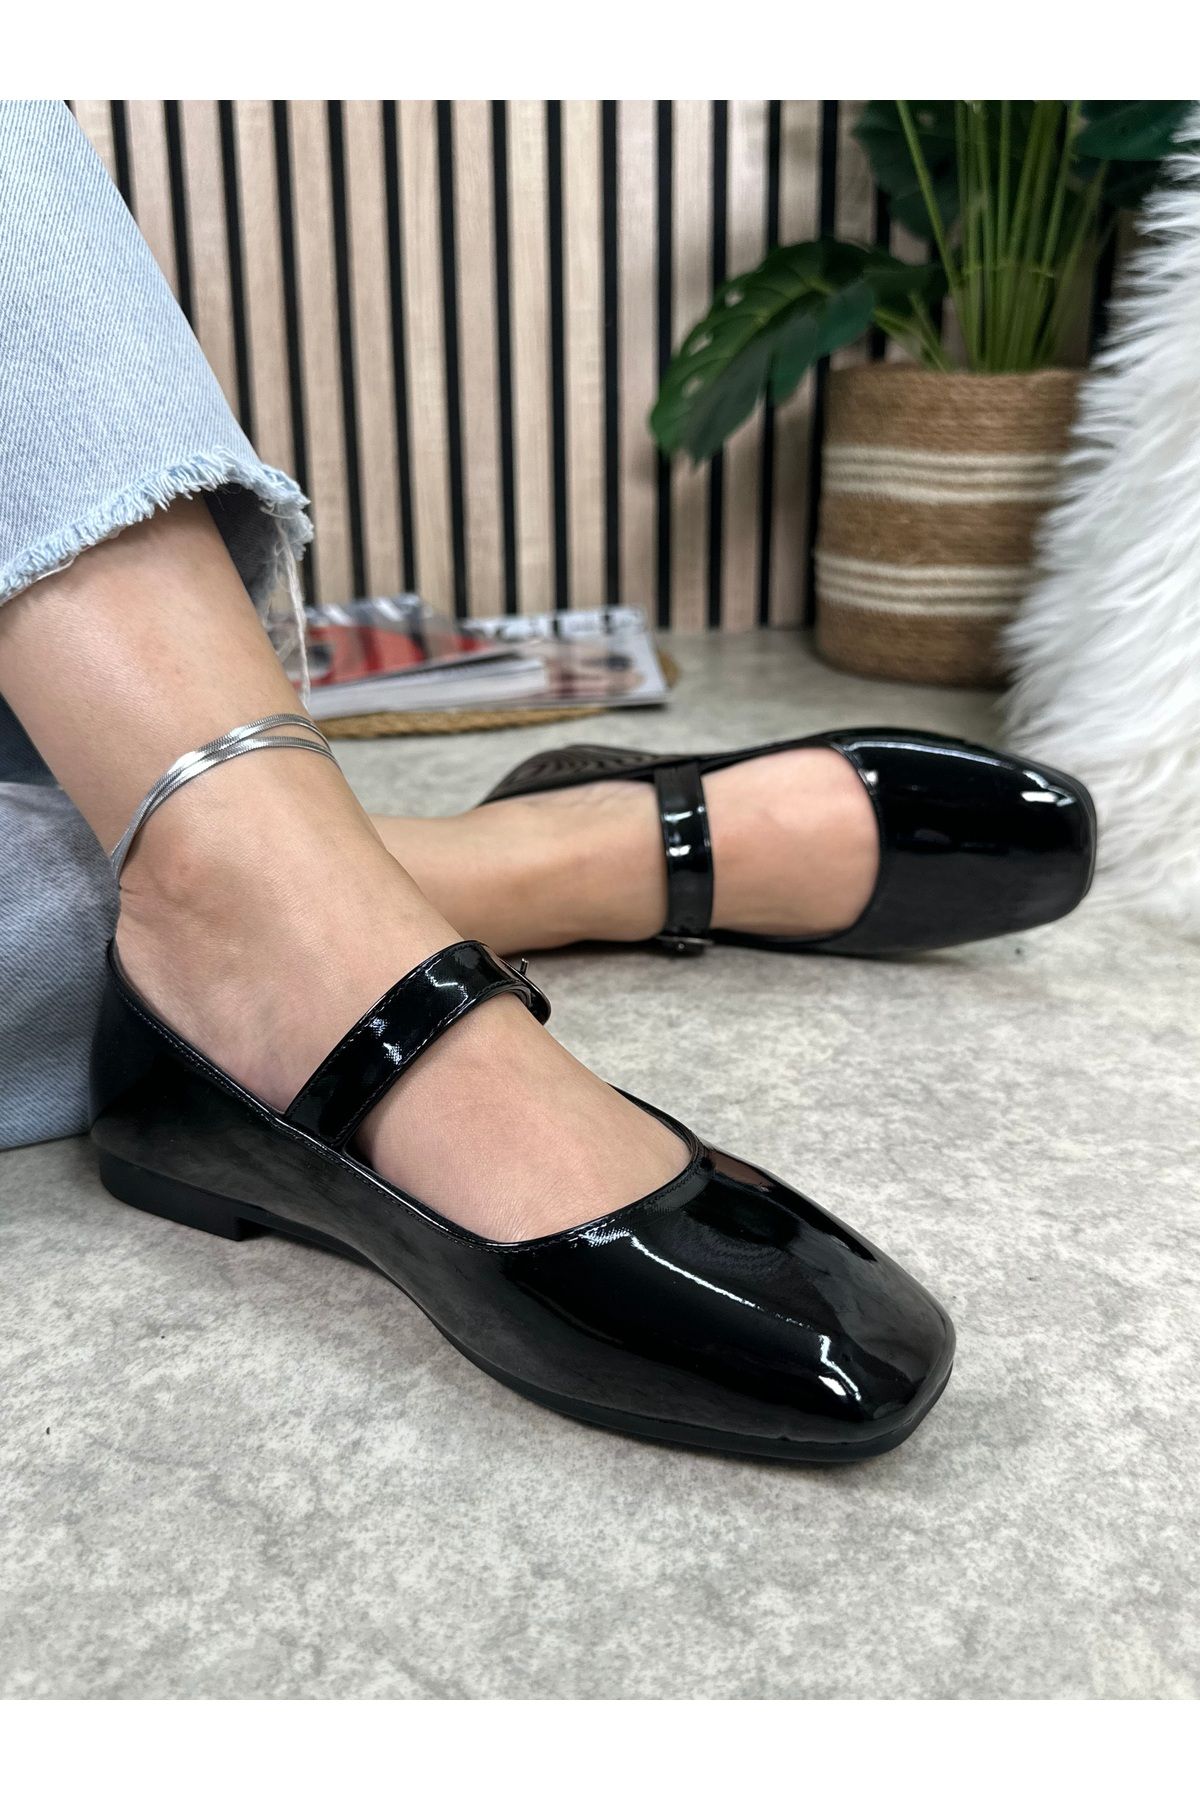 İmerShoes Günlük Kadın Siyah Rugan Babet Oval Burun Alçak Topuk Tokalı Hafif Rahat Ayakkabı M-506